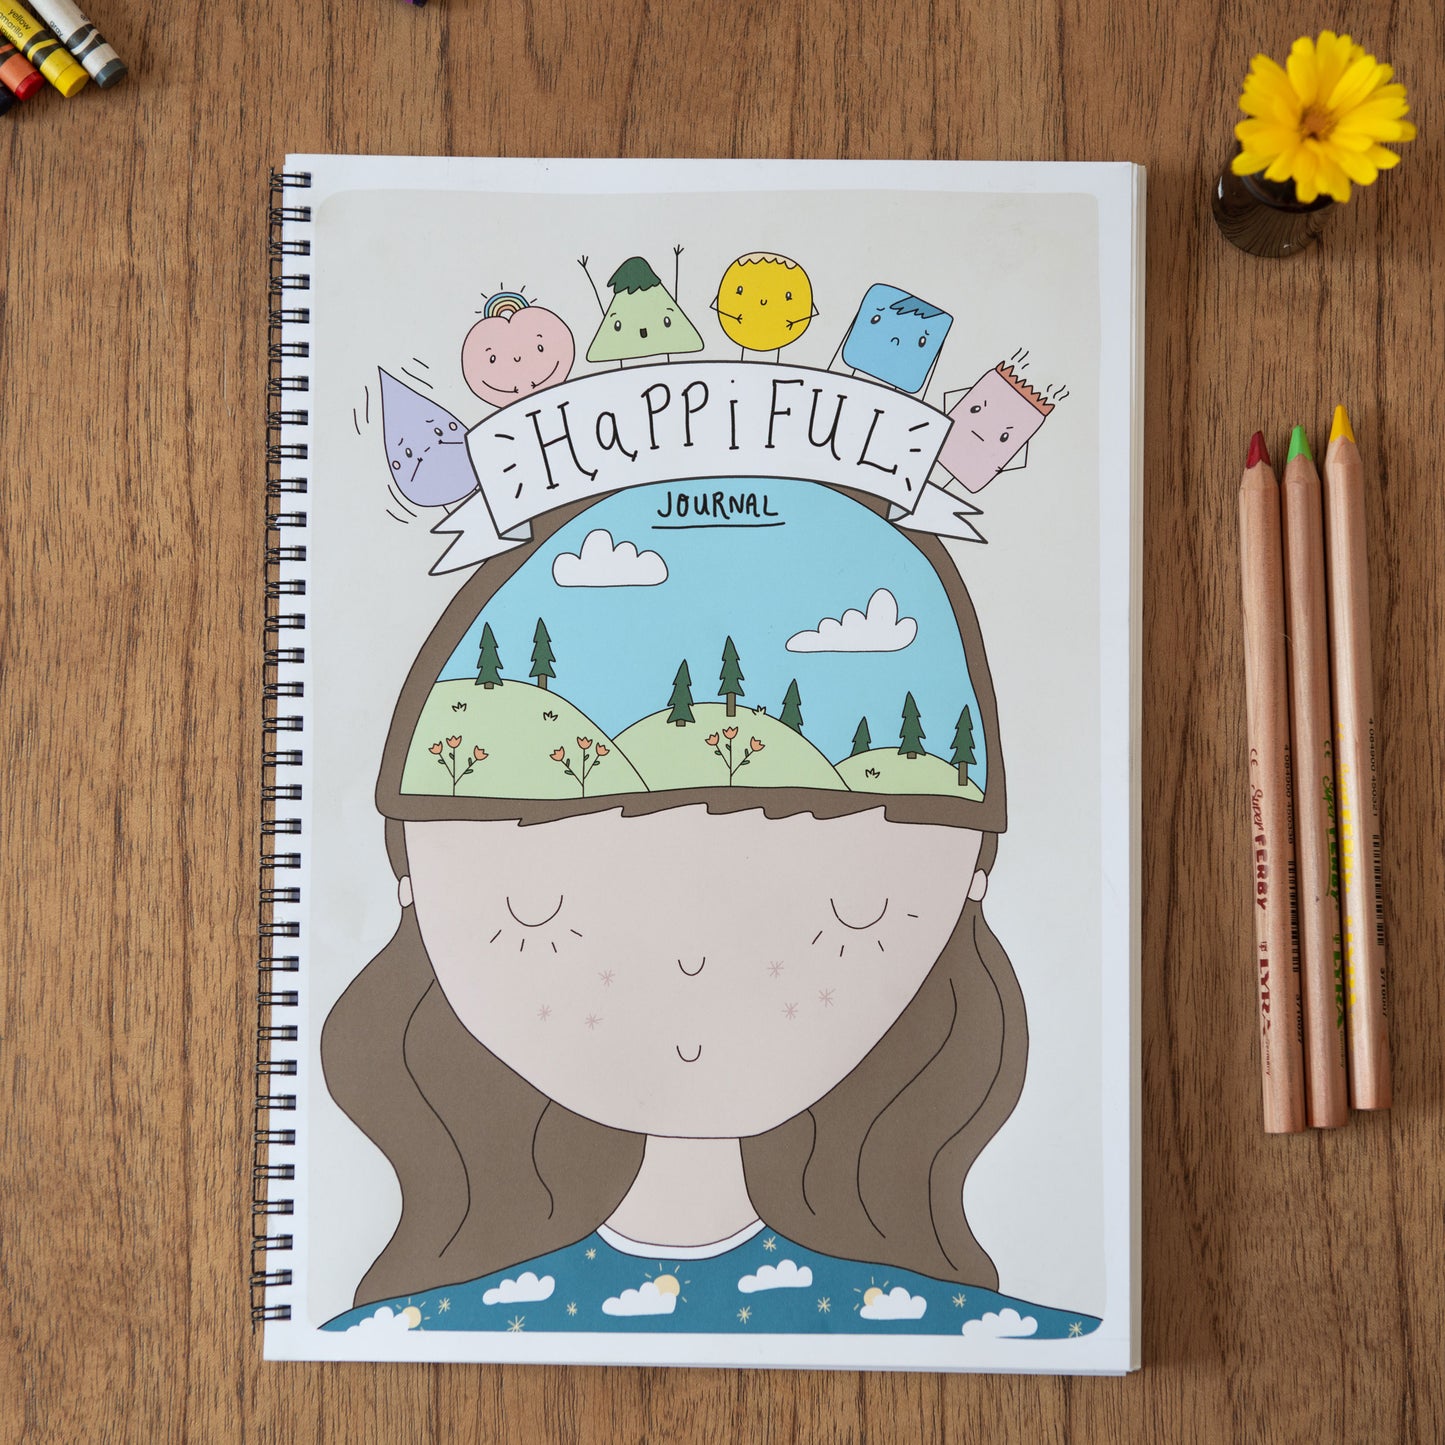 Happiful Journal - a gratitude workbook for children